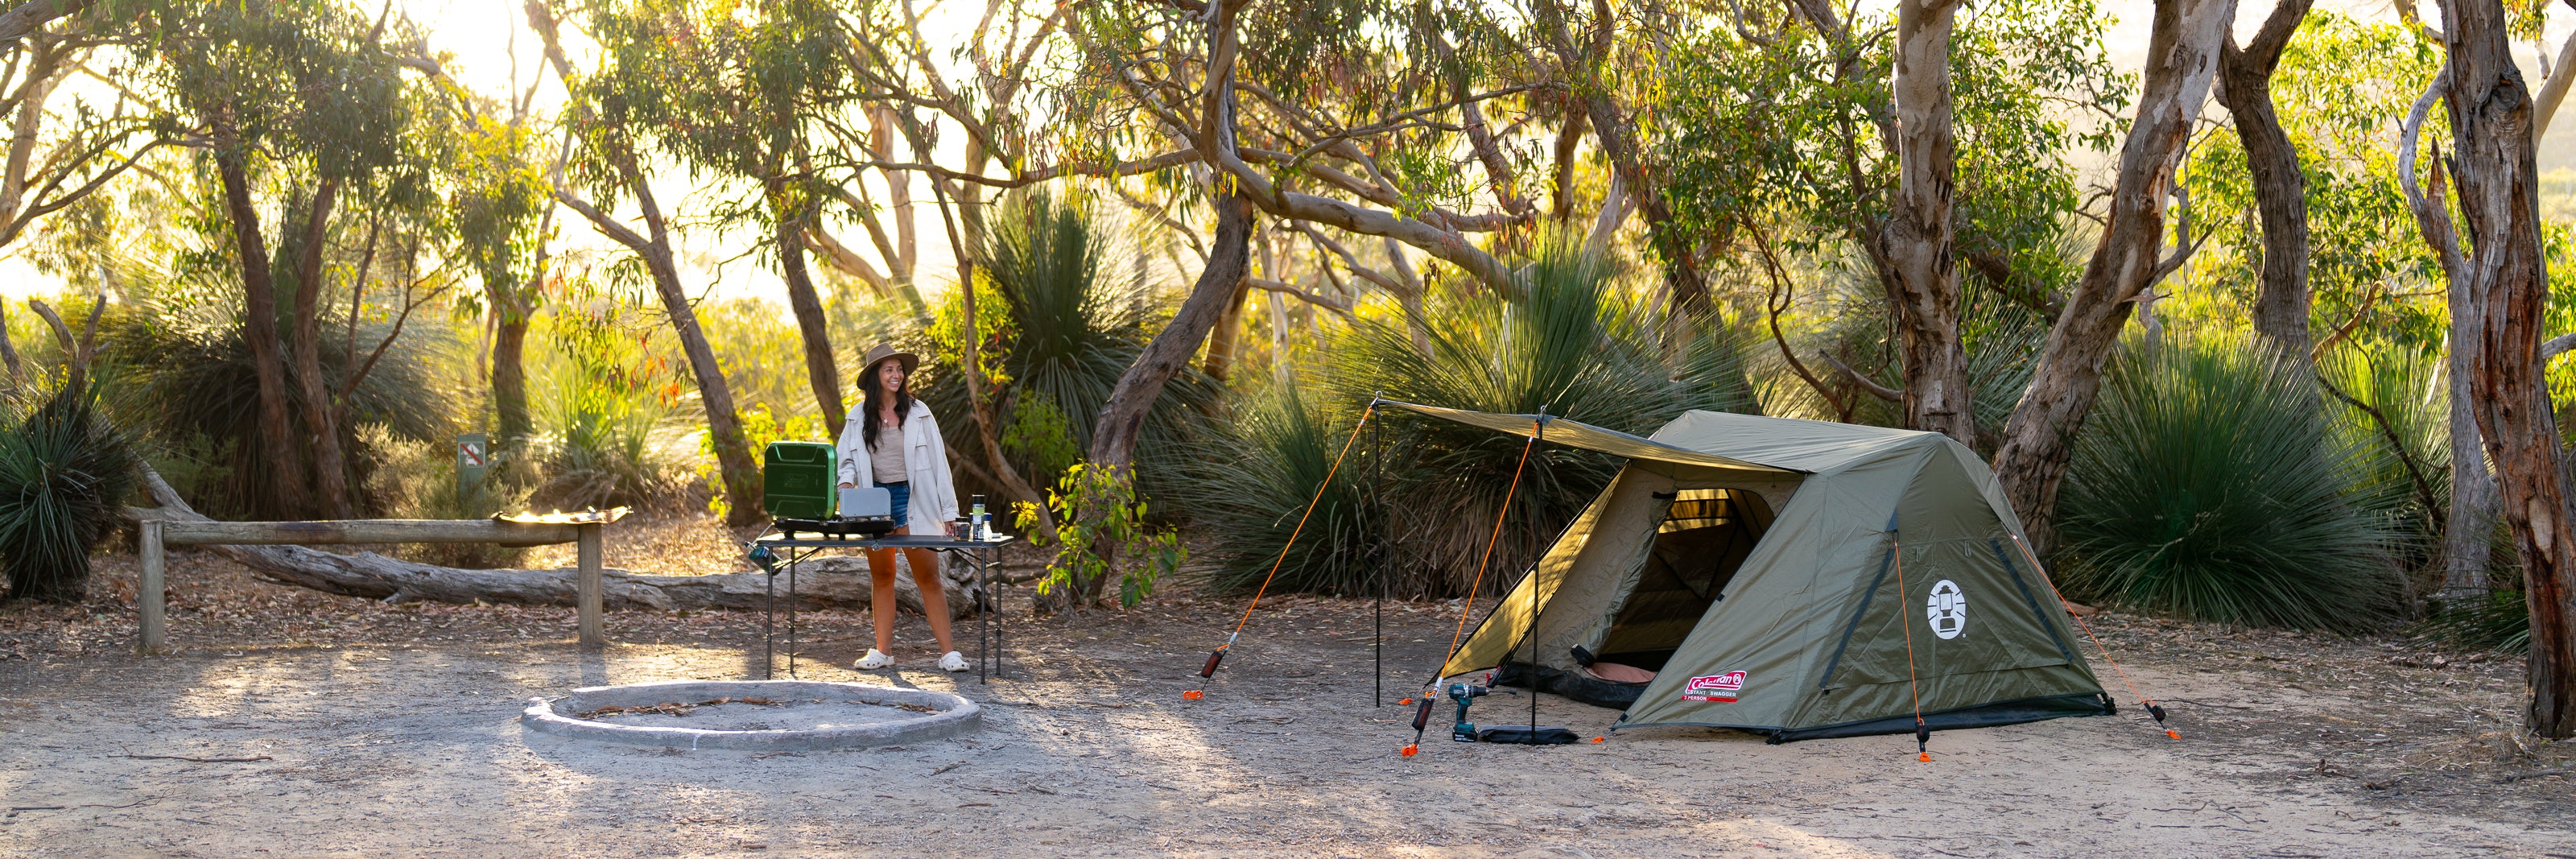 Camping in tent at a bush campsite | Tent Camping | STEADFAST Lite | Hard Terra Lite | Tiegear Guy Rope Lite